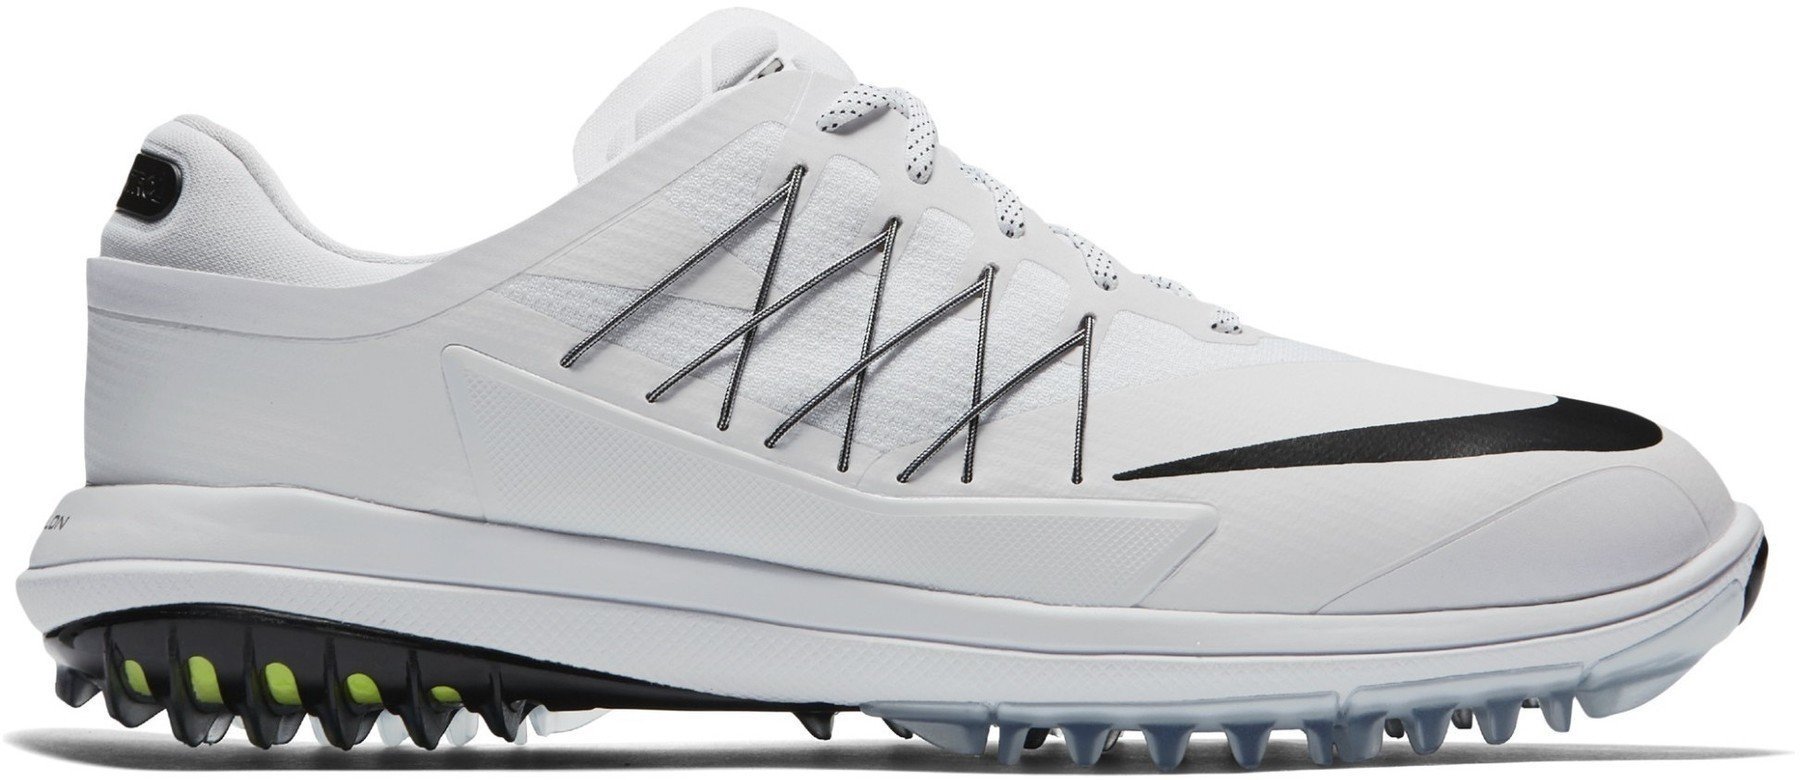 Herren Golfschuhe Nike Lunar Control Vapor Golfschuhe Herren White US 9